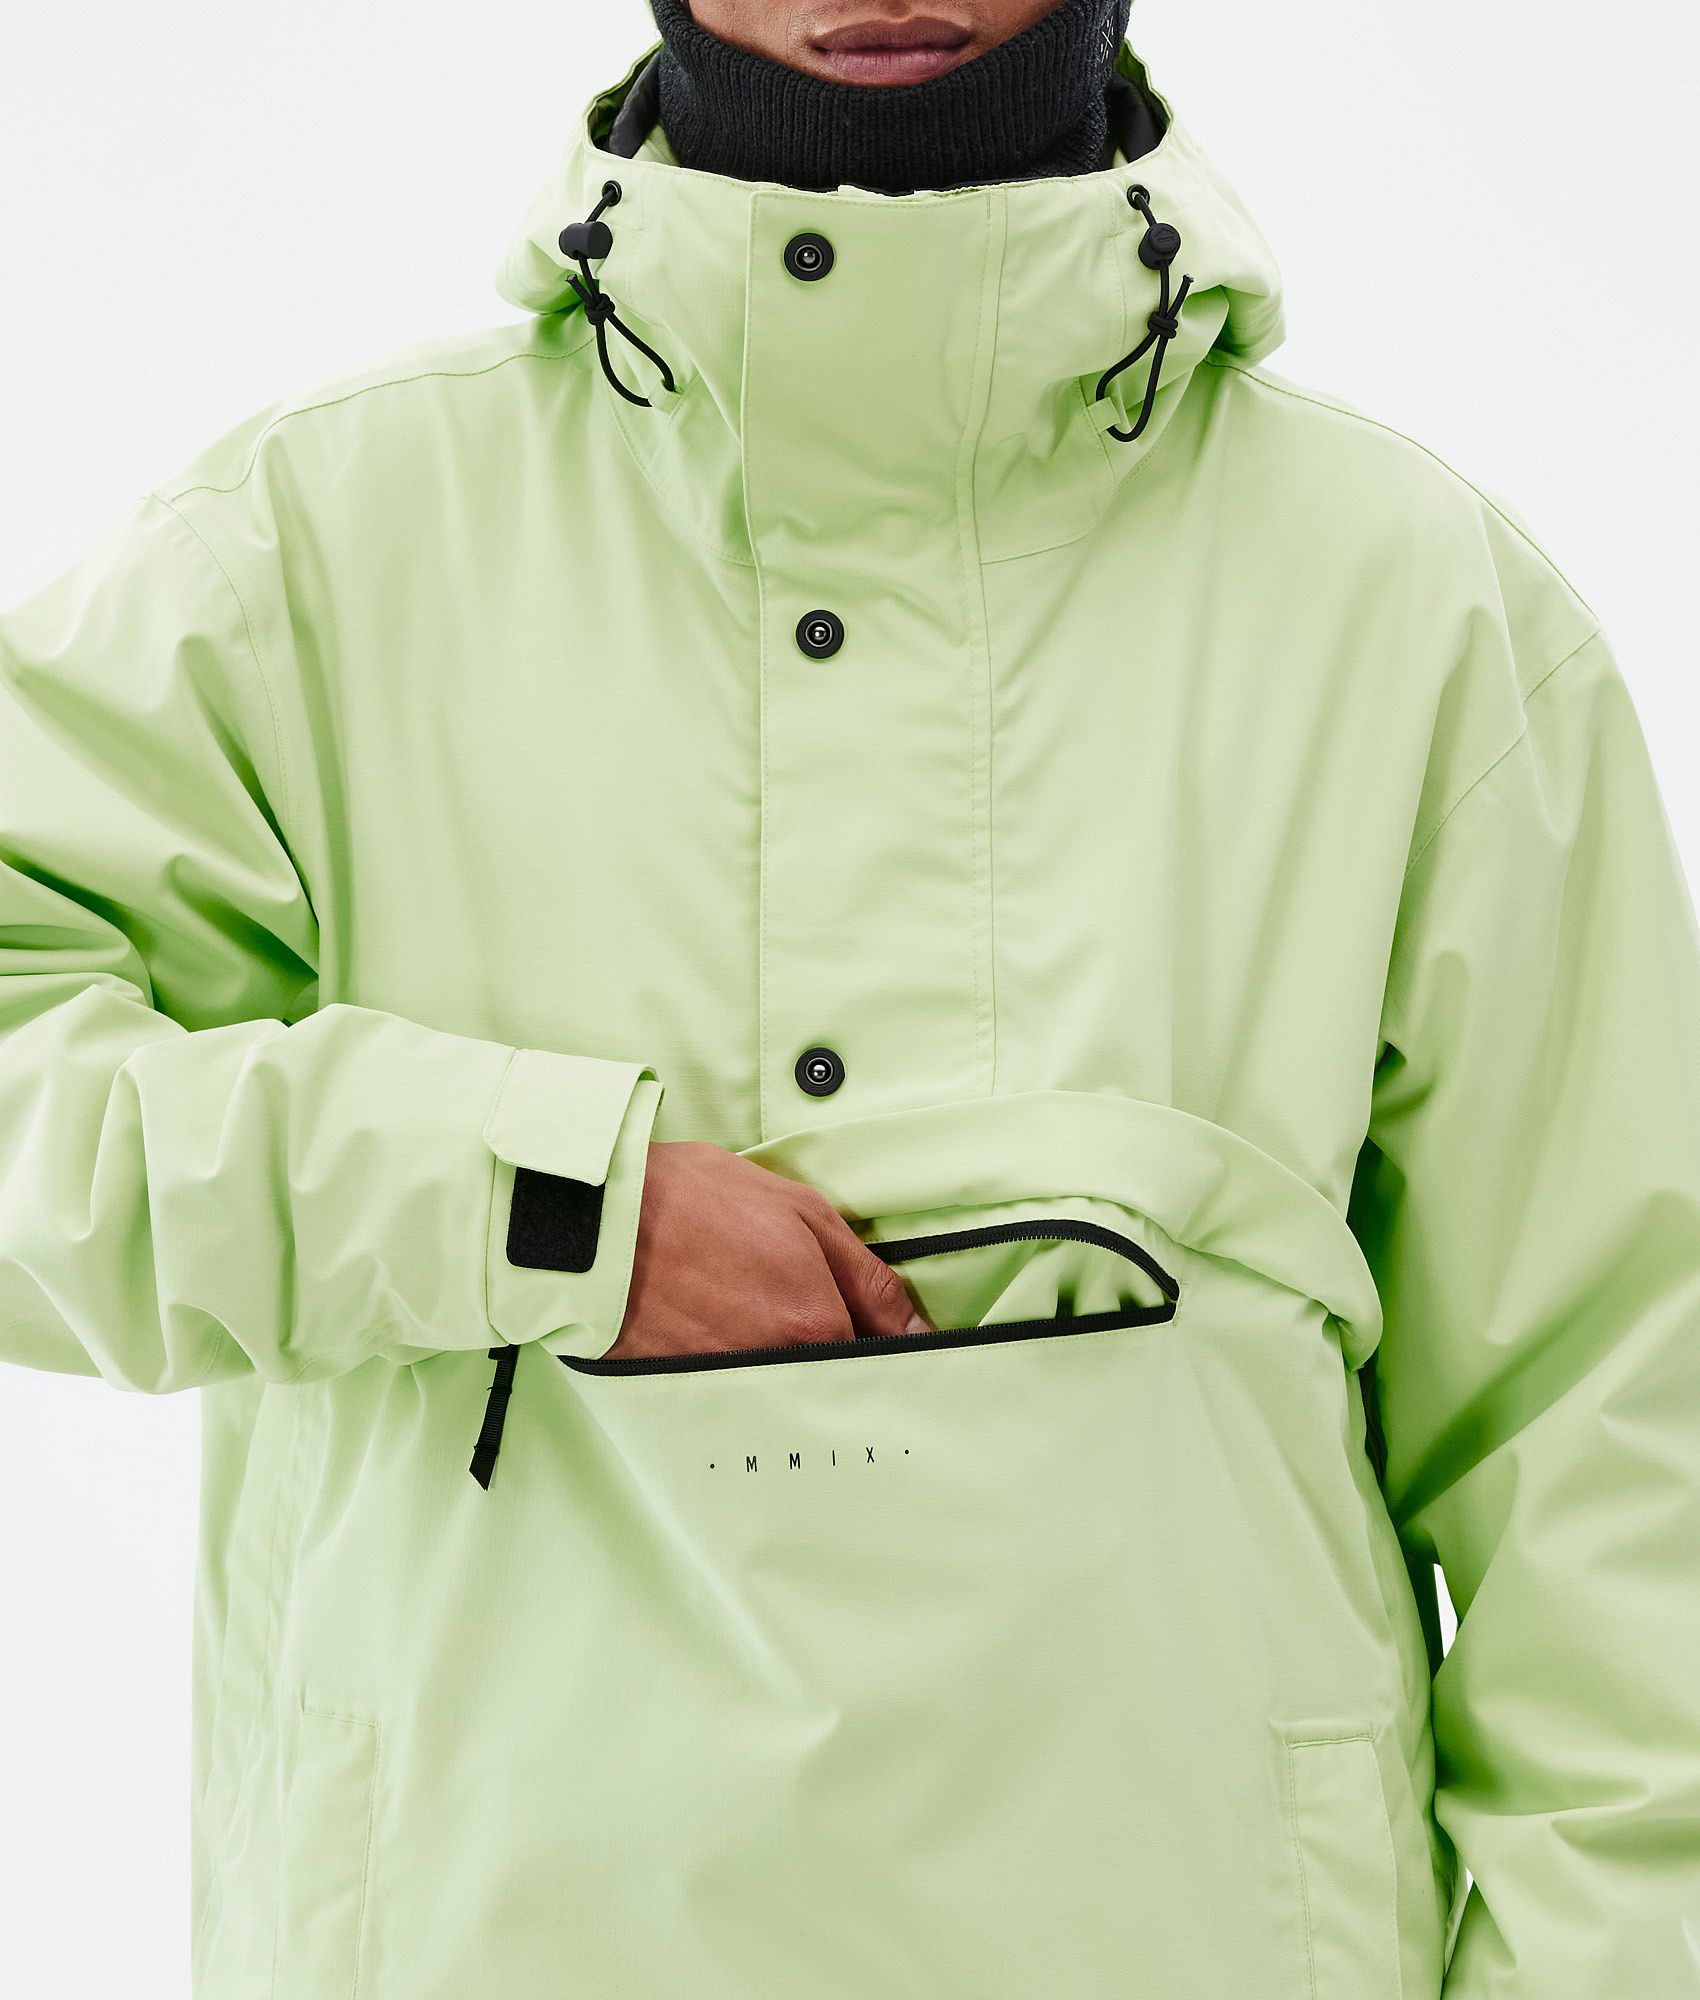 Women's Asymmetrical Neon Green Leather Jacket - Jackets Expert